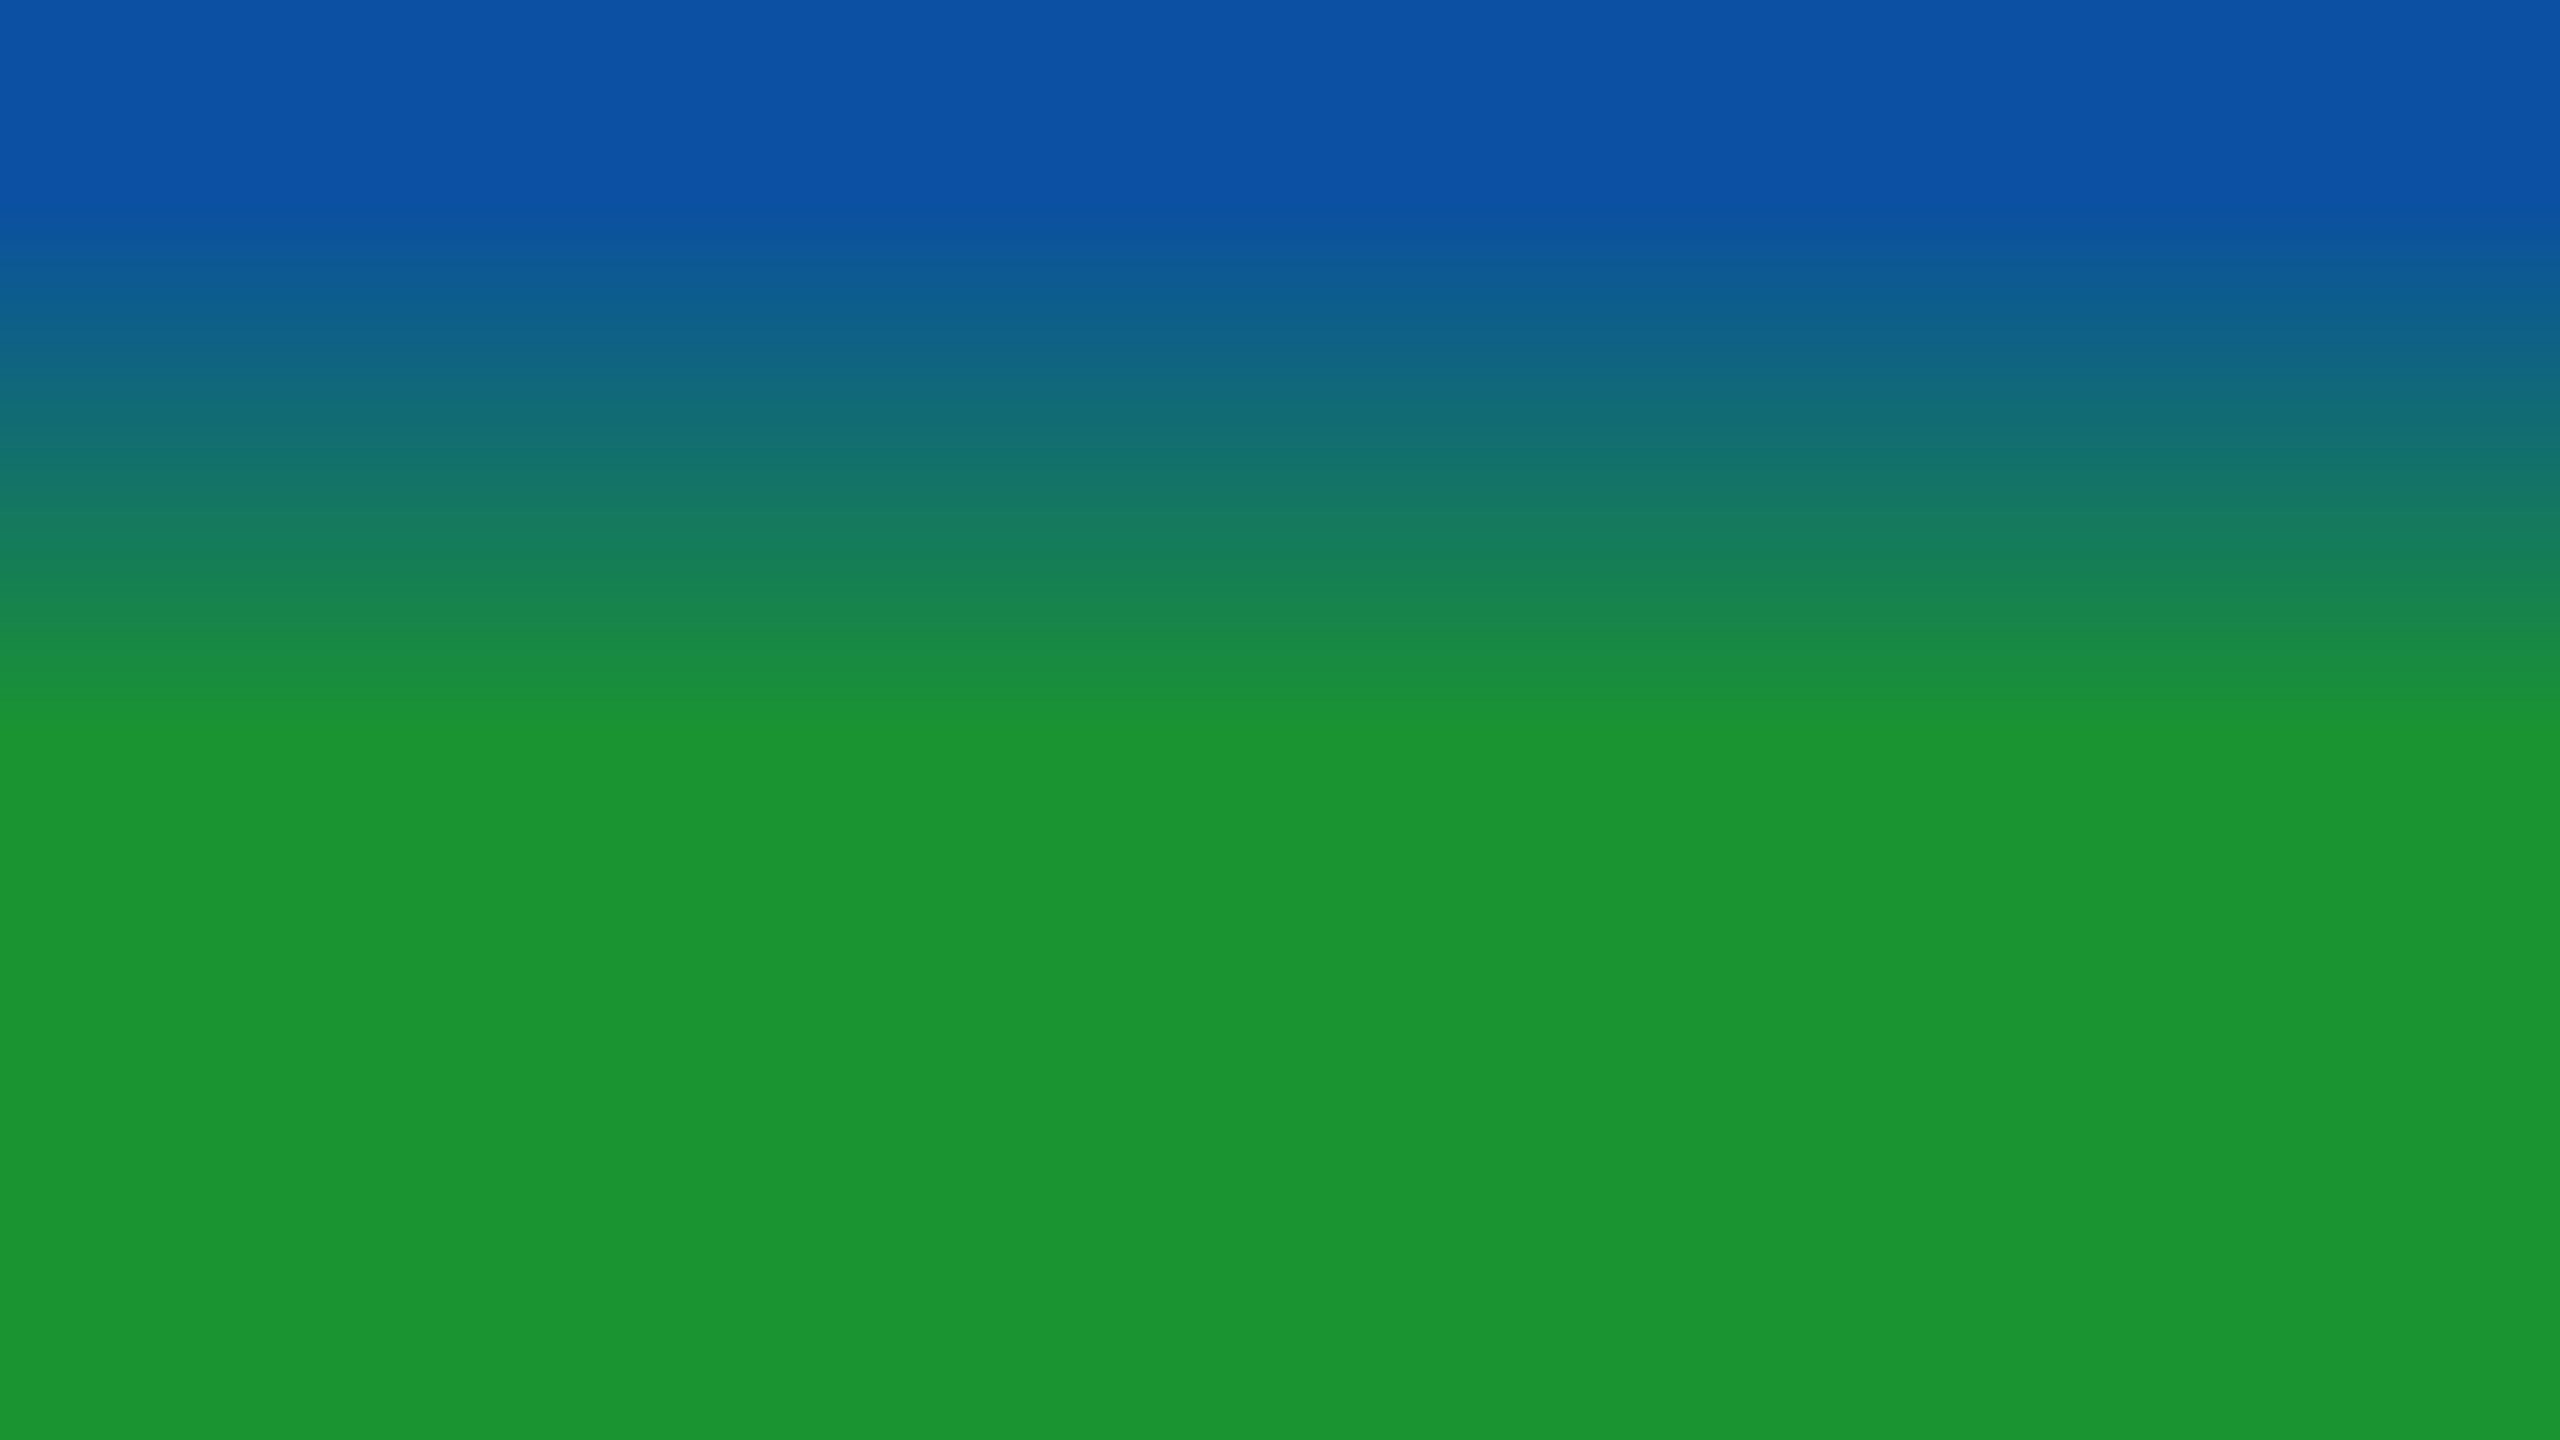 einfache farbtapete,grün,blau,aqua,türkis,tagsüber